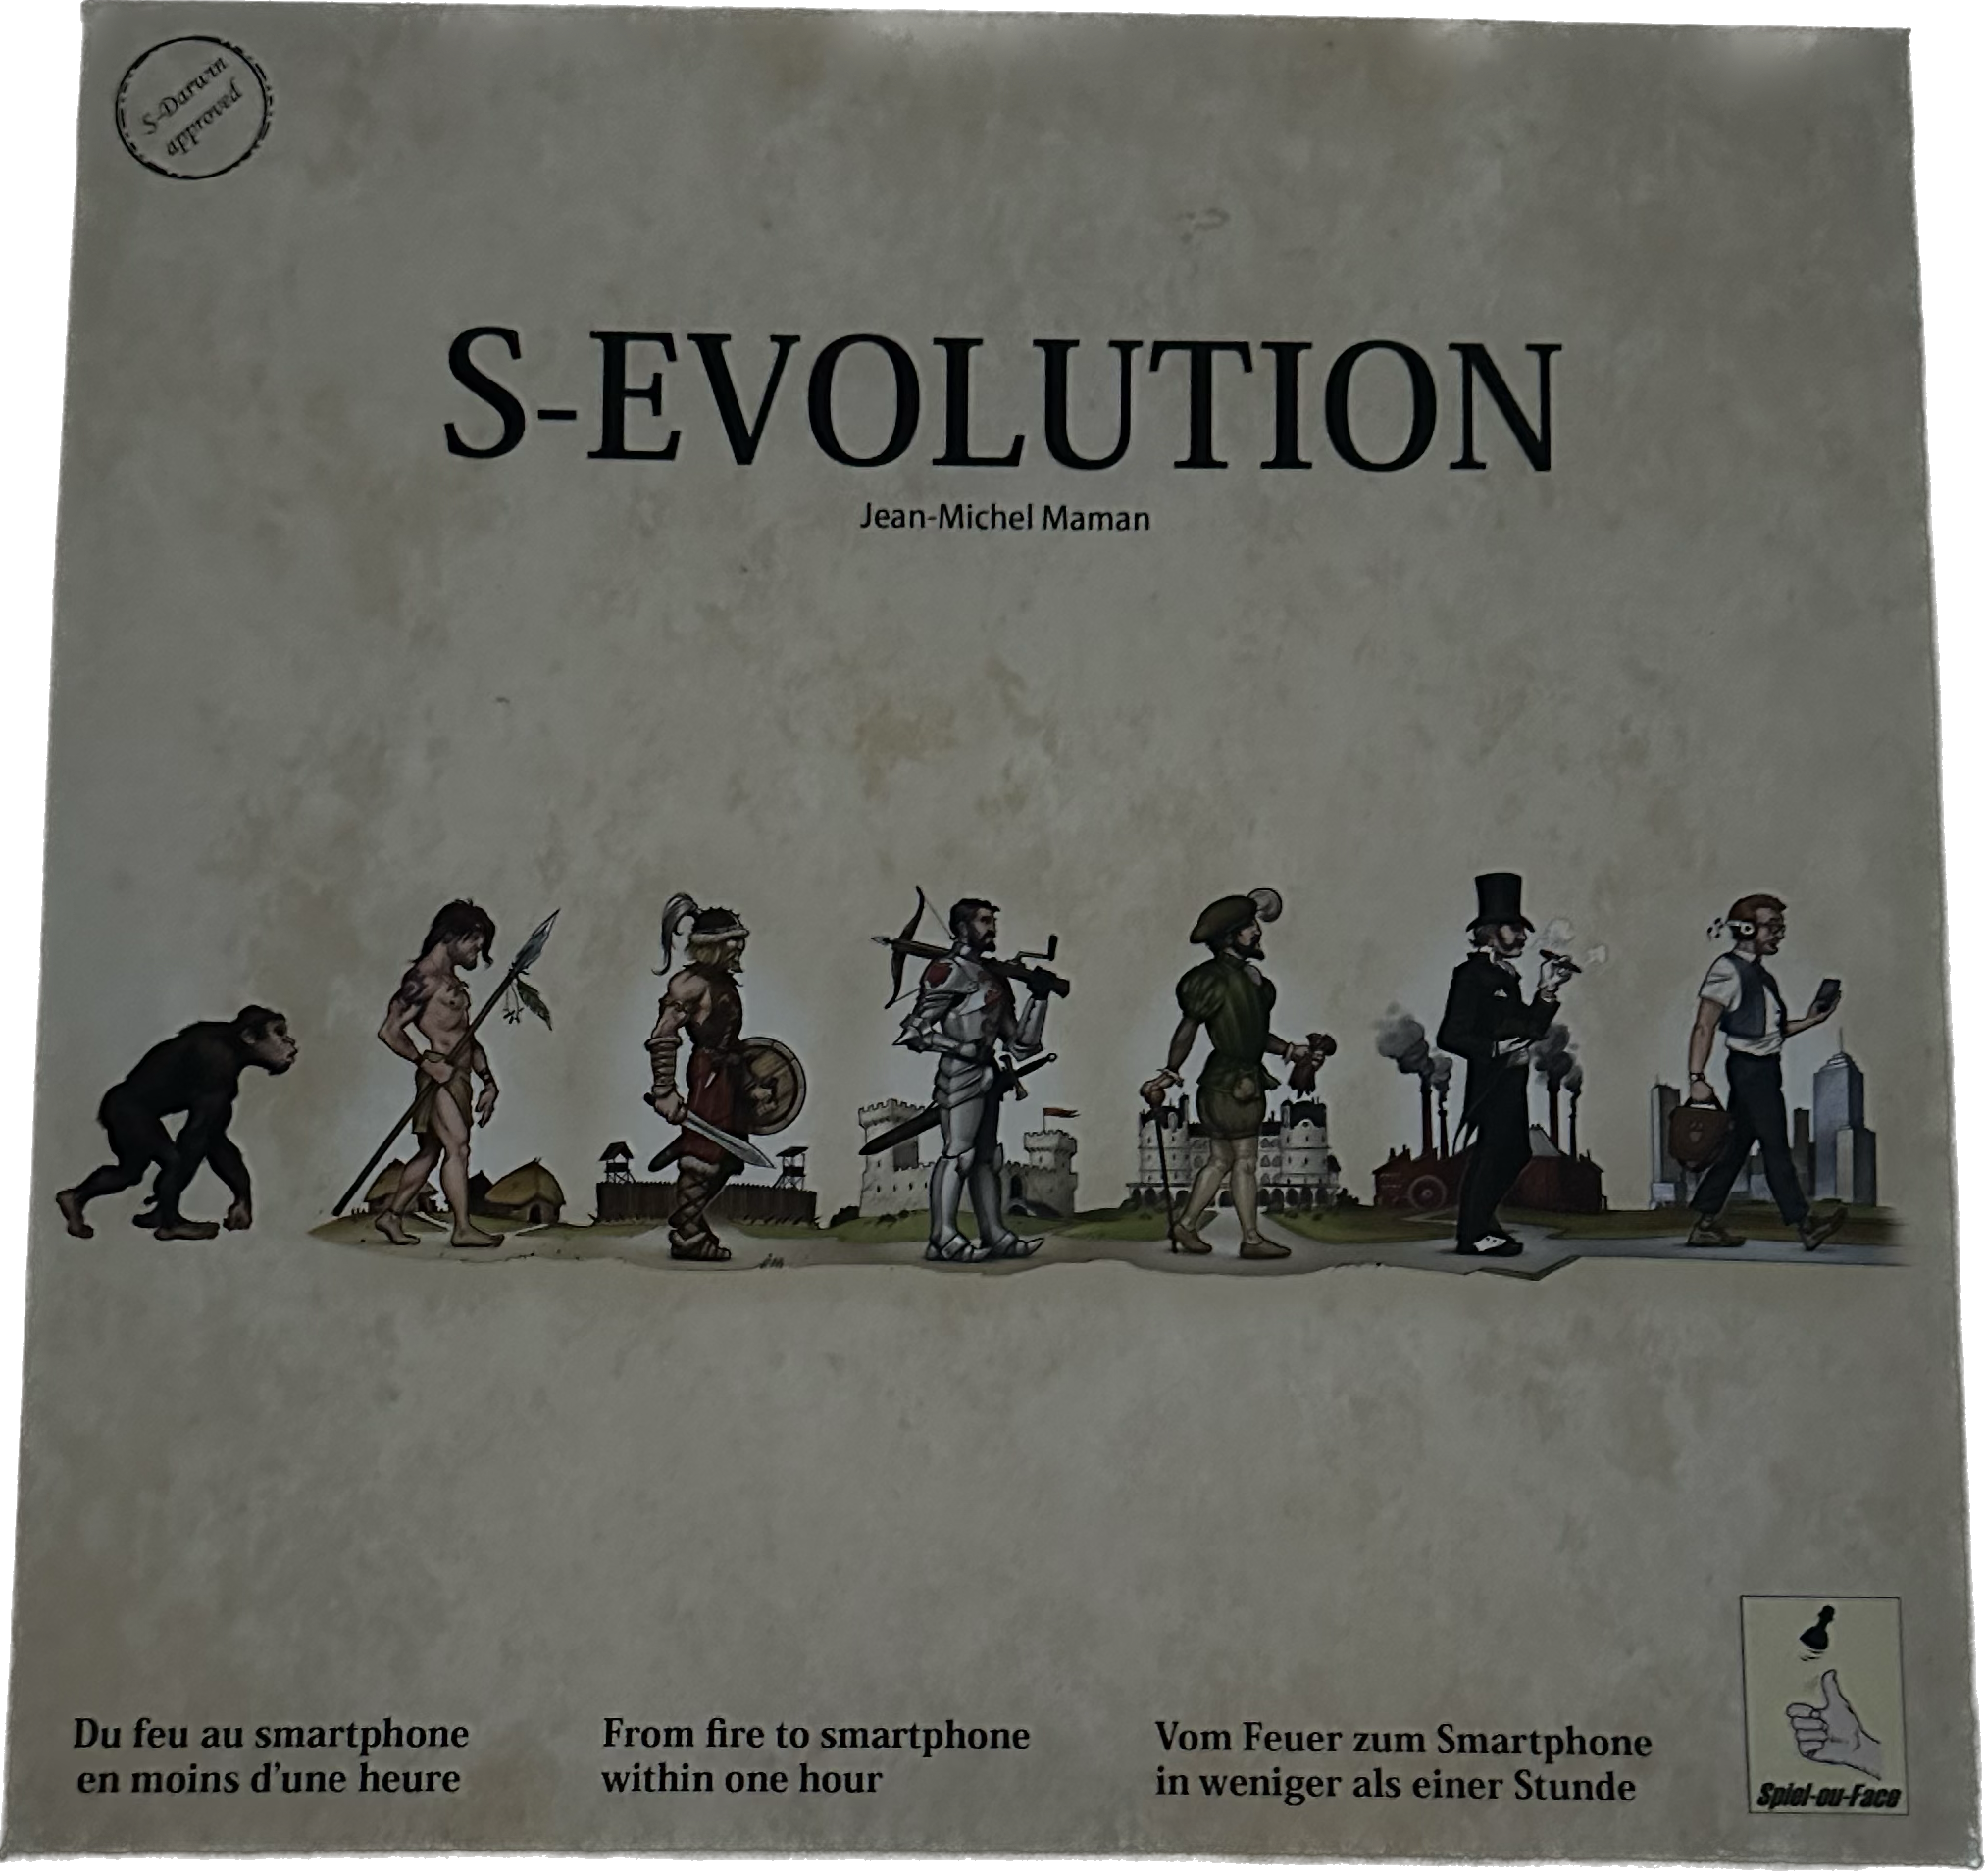 S-EVOLUTION